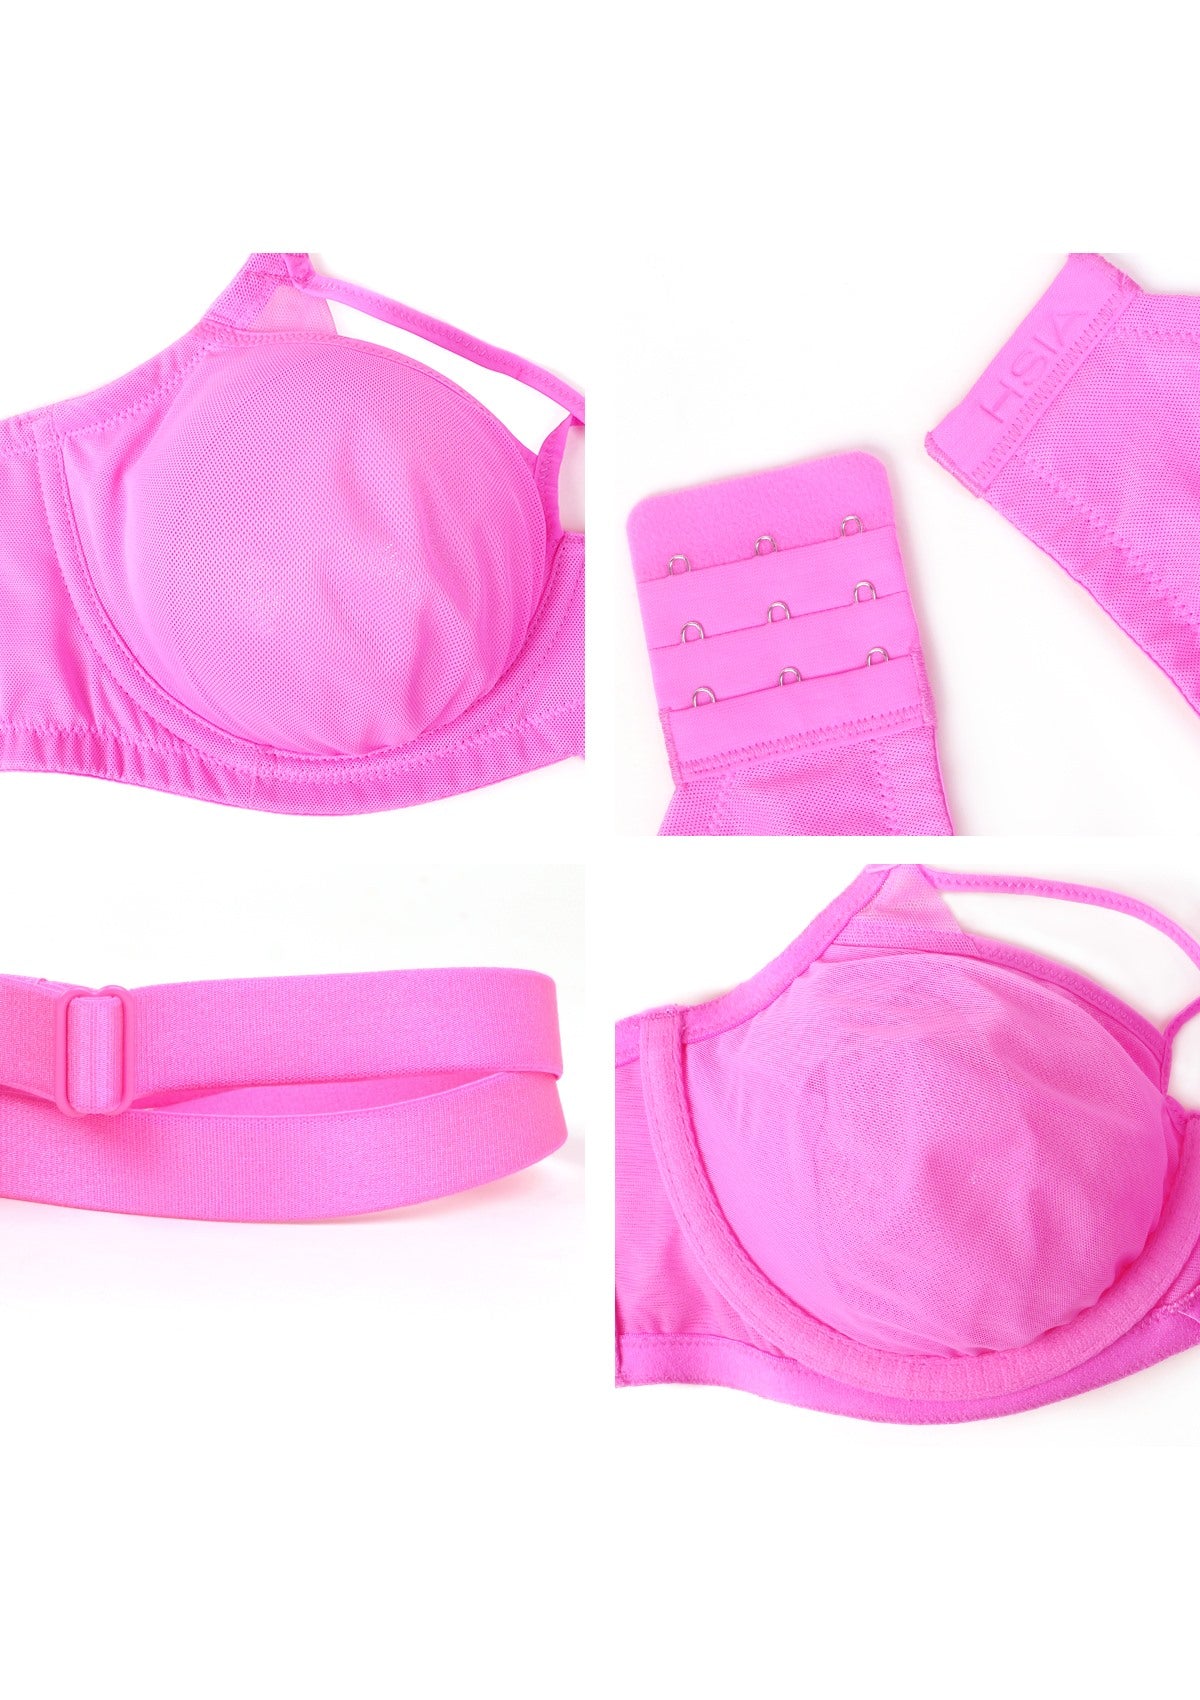 HSIA Billie Cross Front Strap Smooth Sheer Mesh Comfy Underwire Bra - Barbie Pink / 42 / C